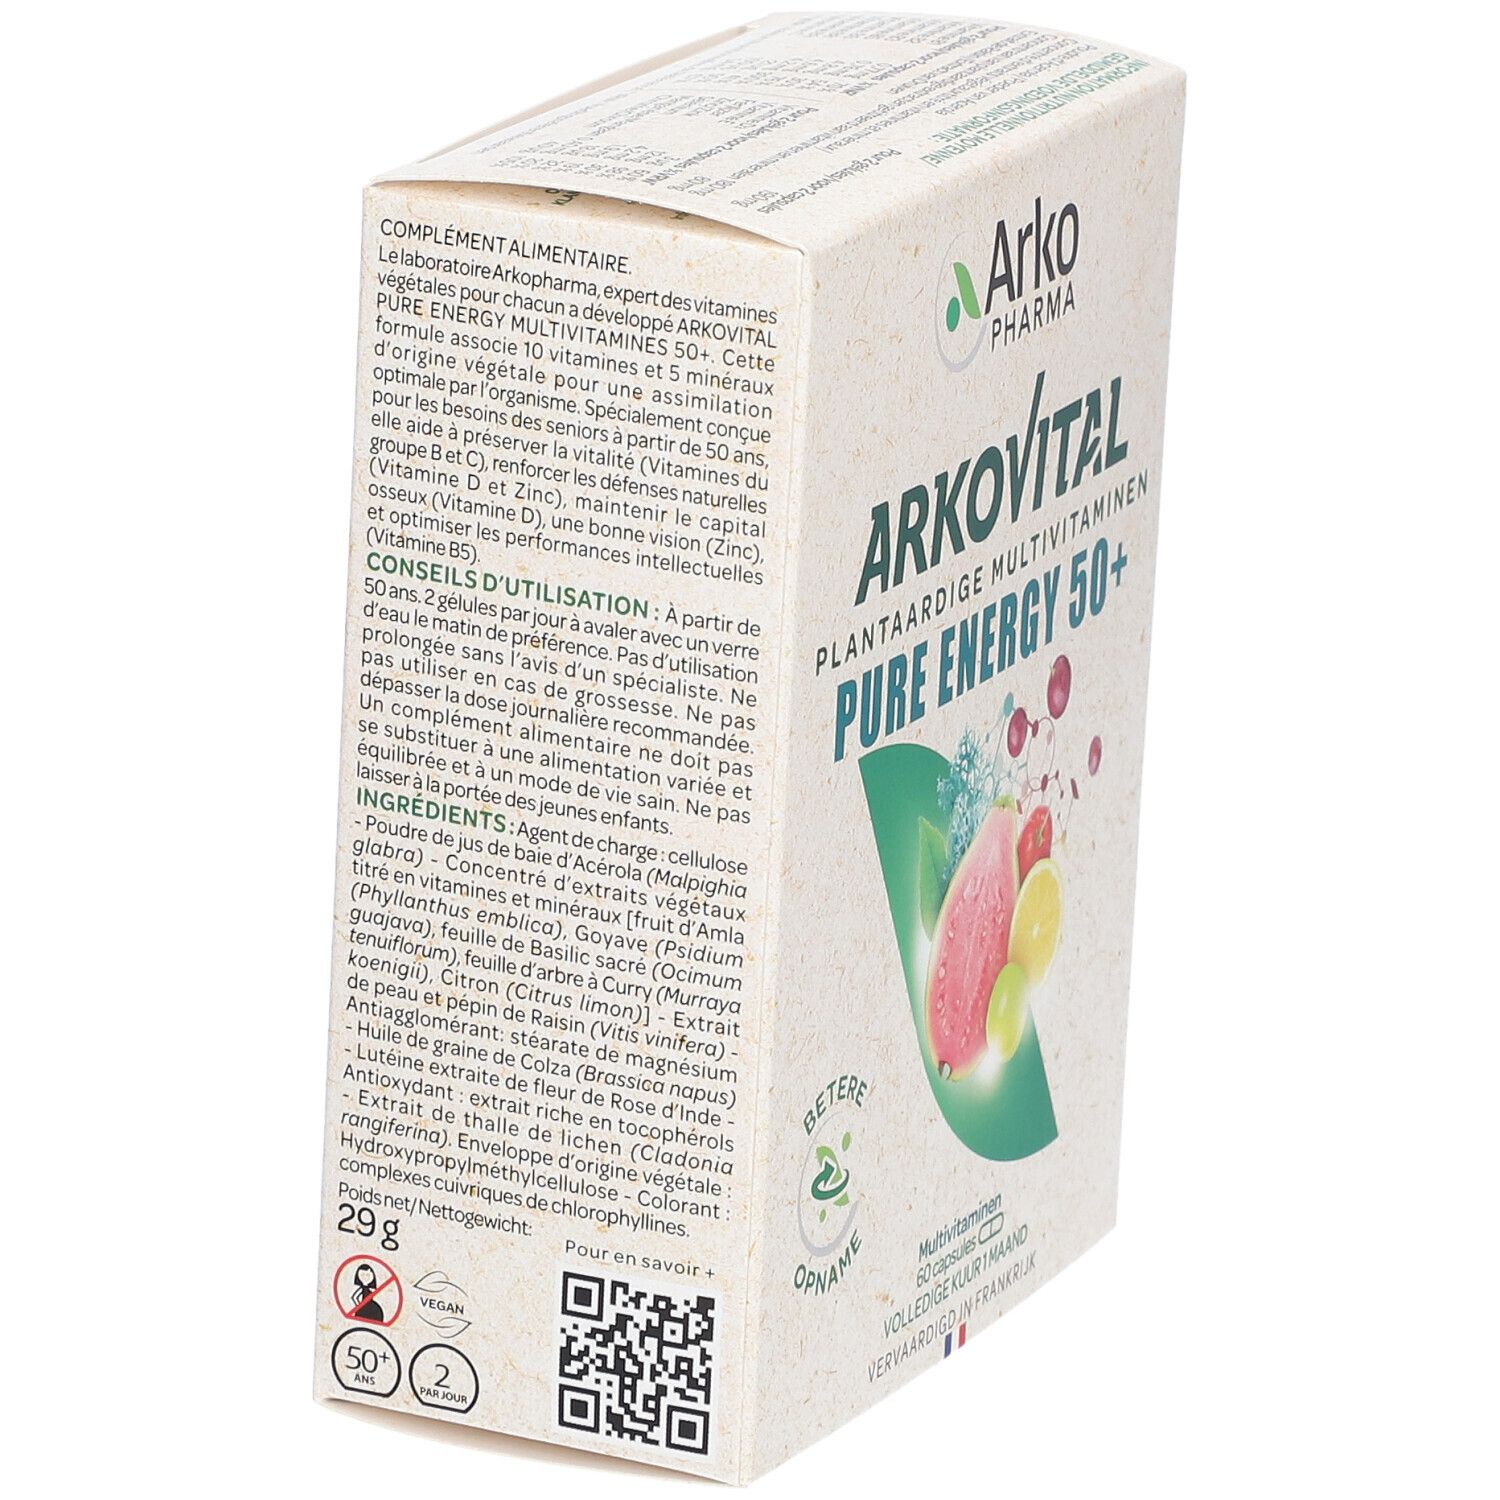 Arkovital® Pure Energy Eypert Multivitamin 50+